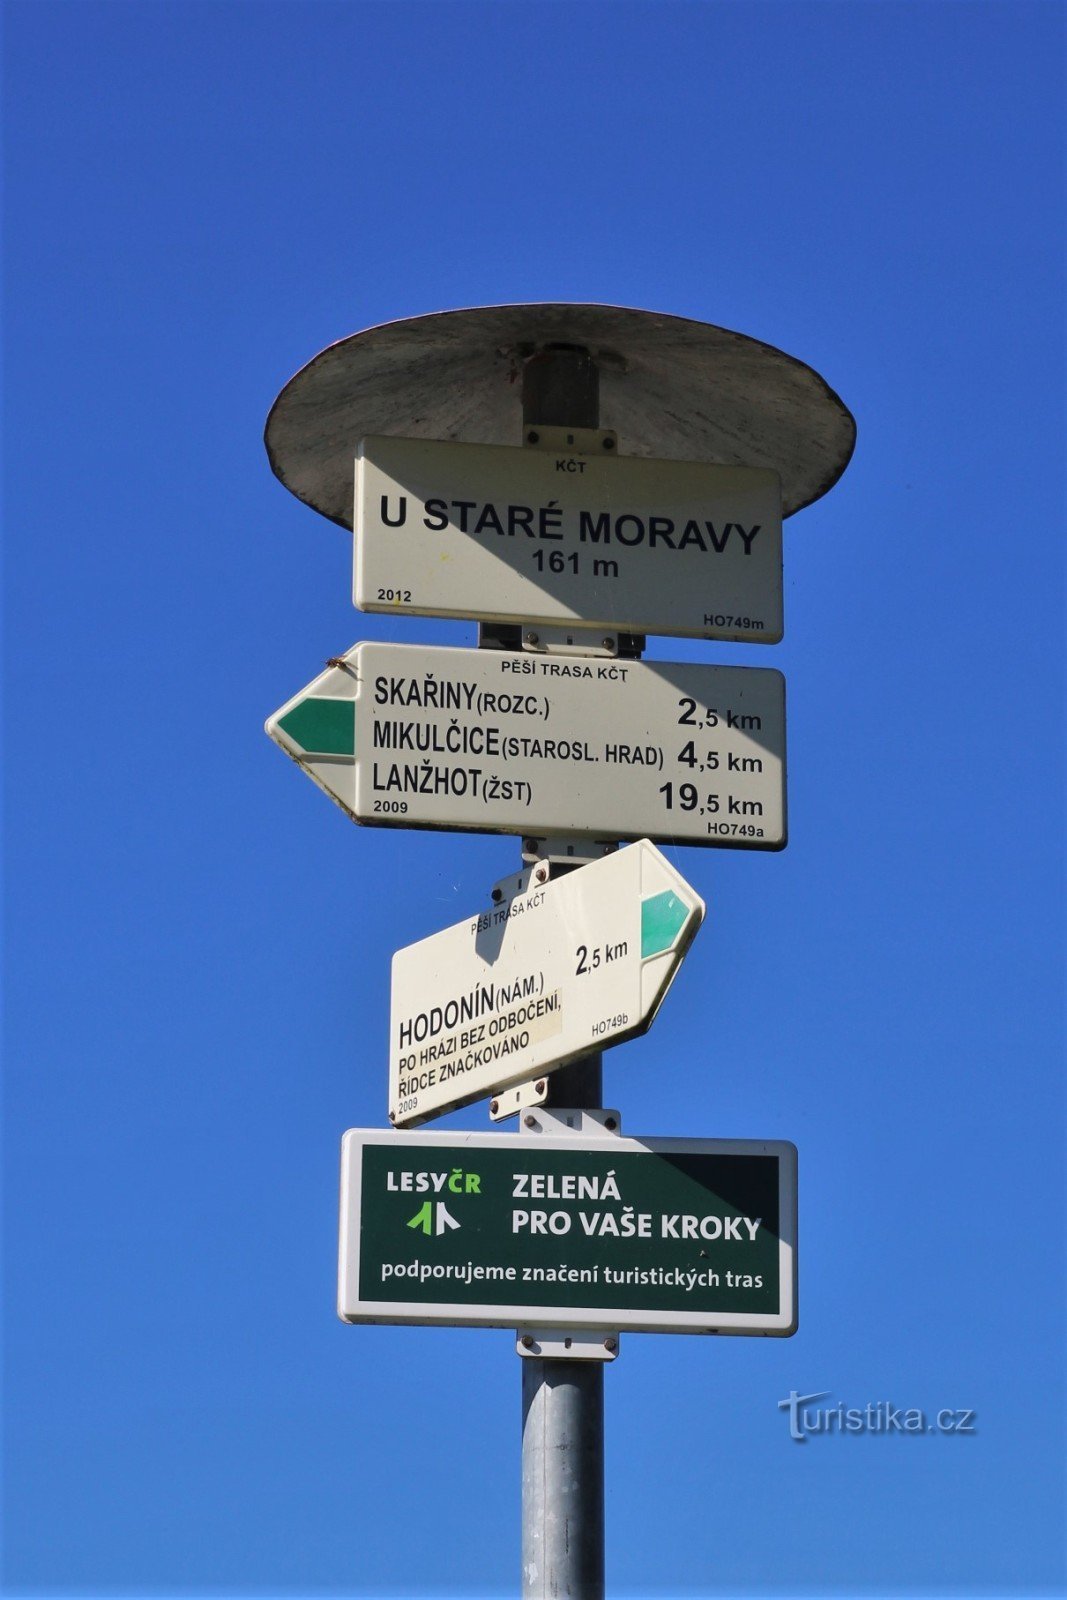 Toeristisch kruispunt U Stará Morava - gids